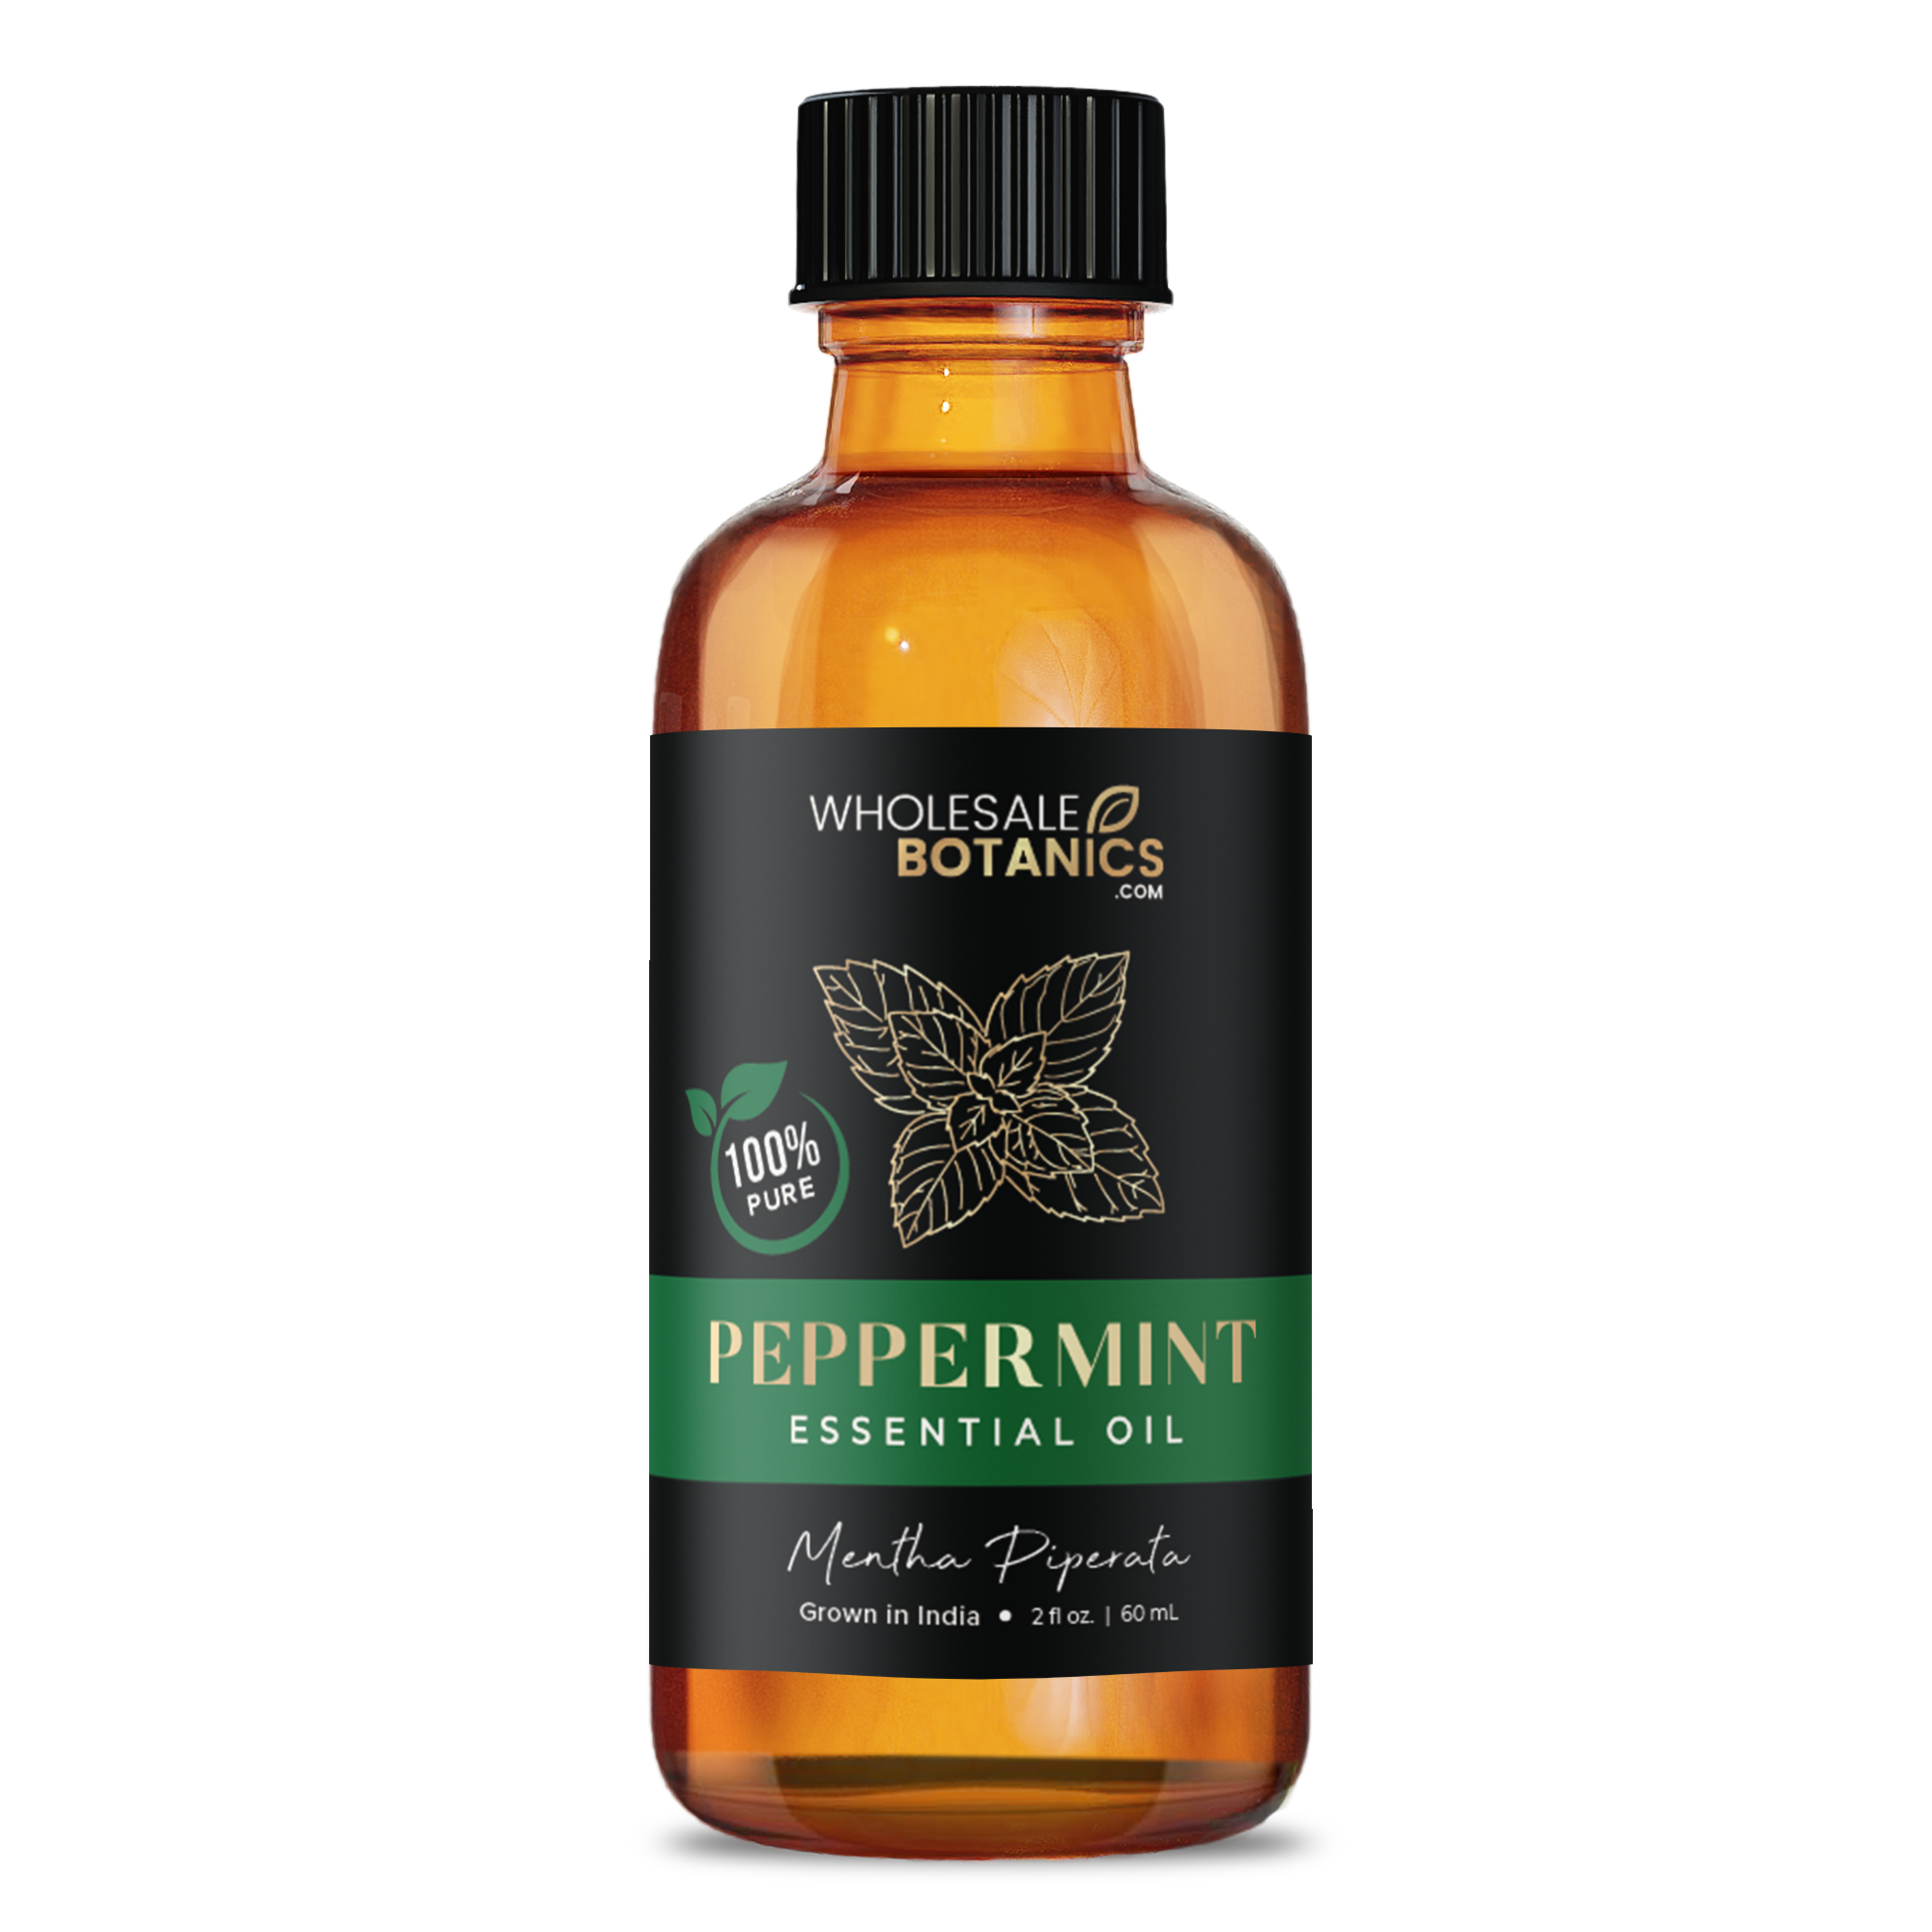 Purity Peppermint Essential Oil - Mentha Piperita - 2 oz